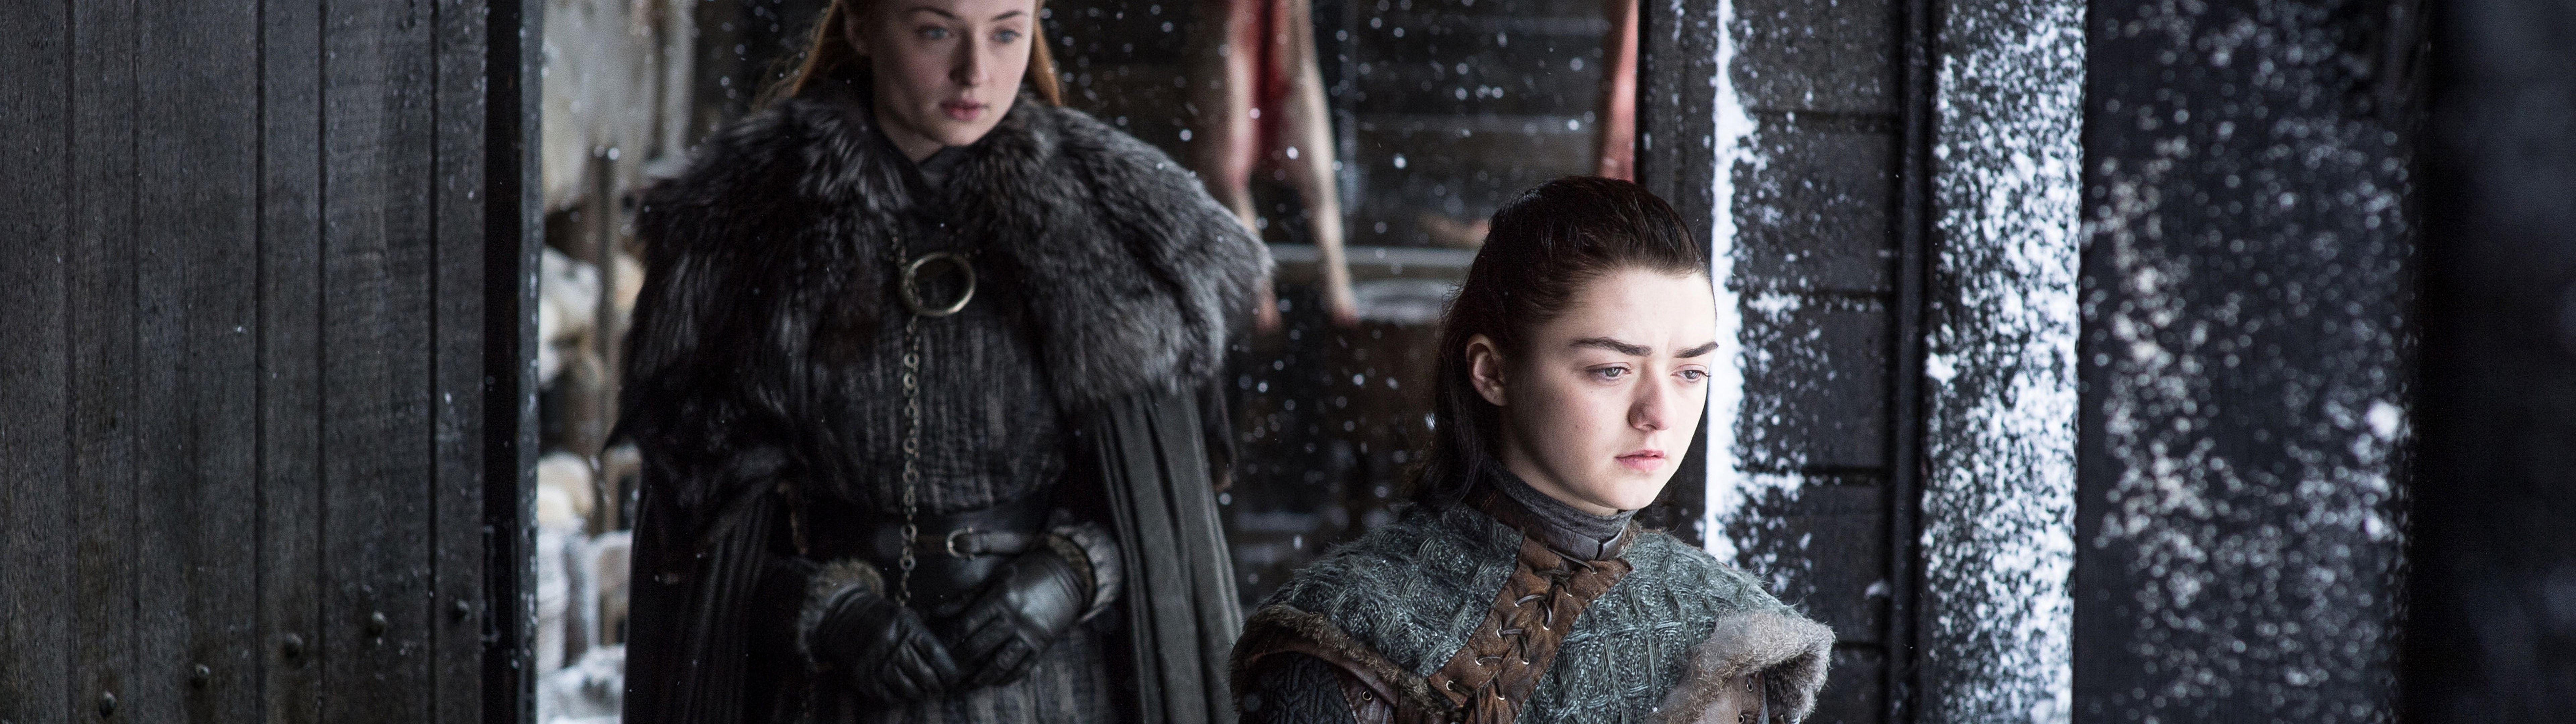 Sansa Stark And Arya Stark Game Of Thrones 8 Wallpapers